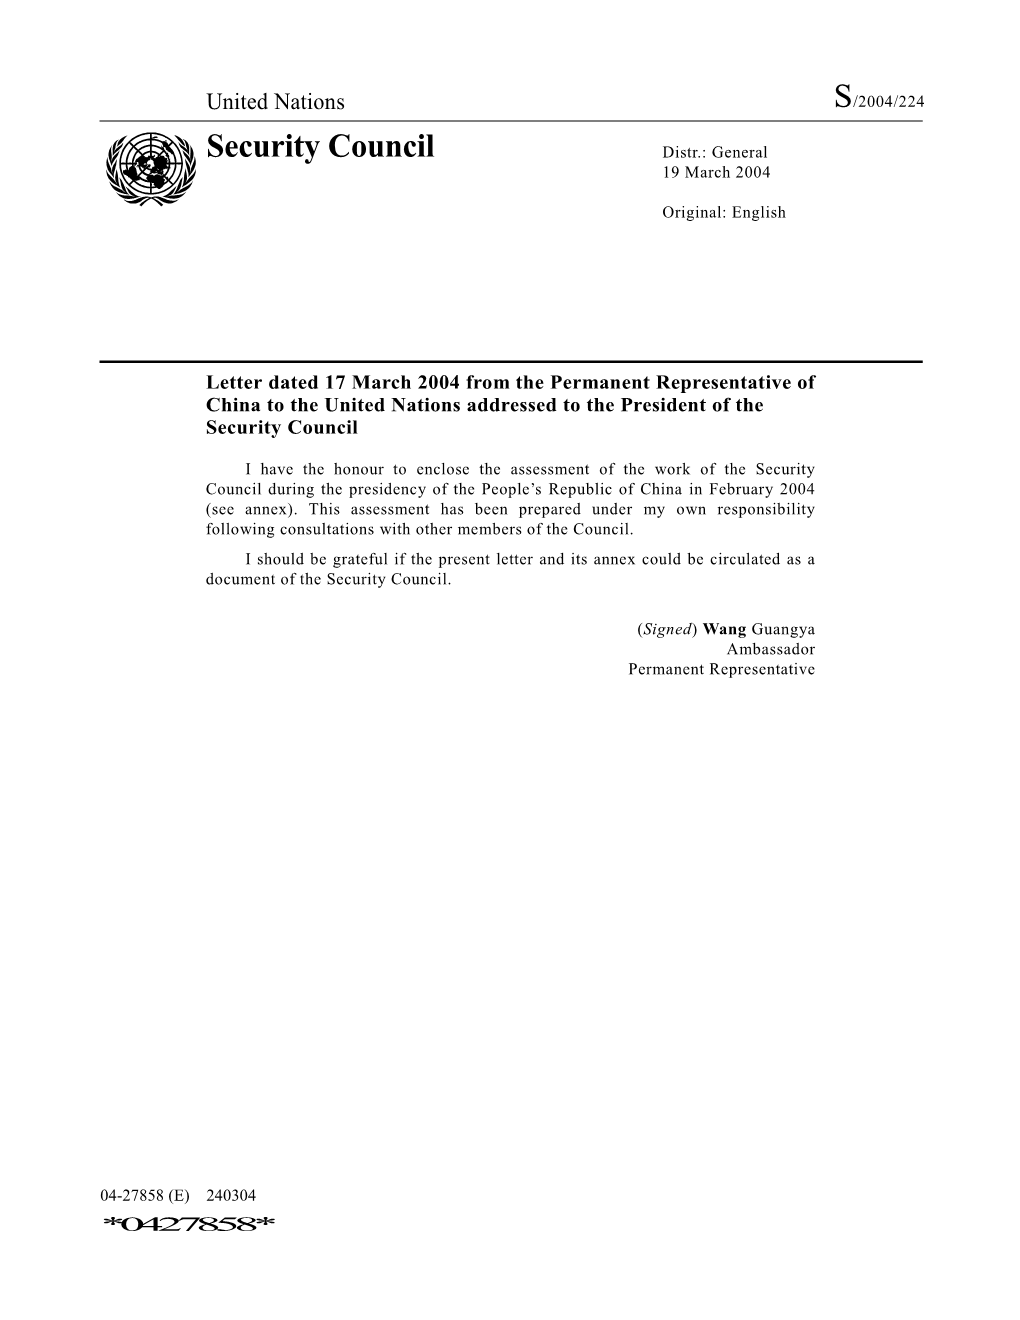 Security Council Distr.: General 19 March 2004